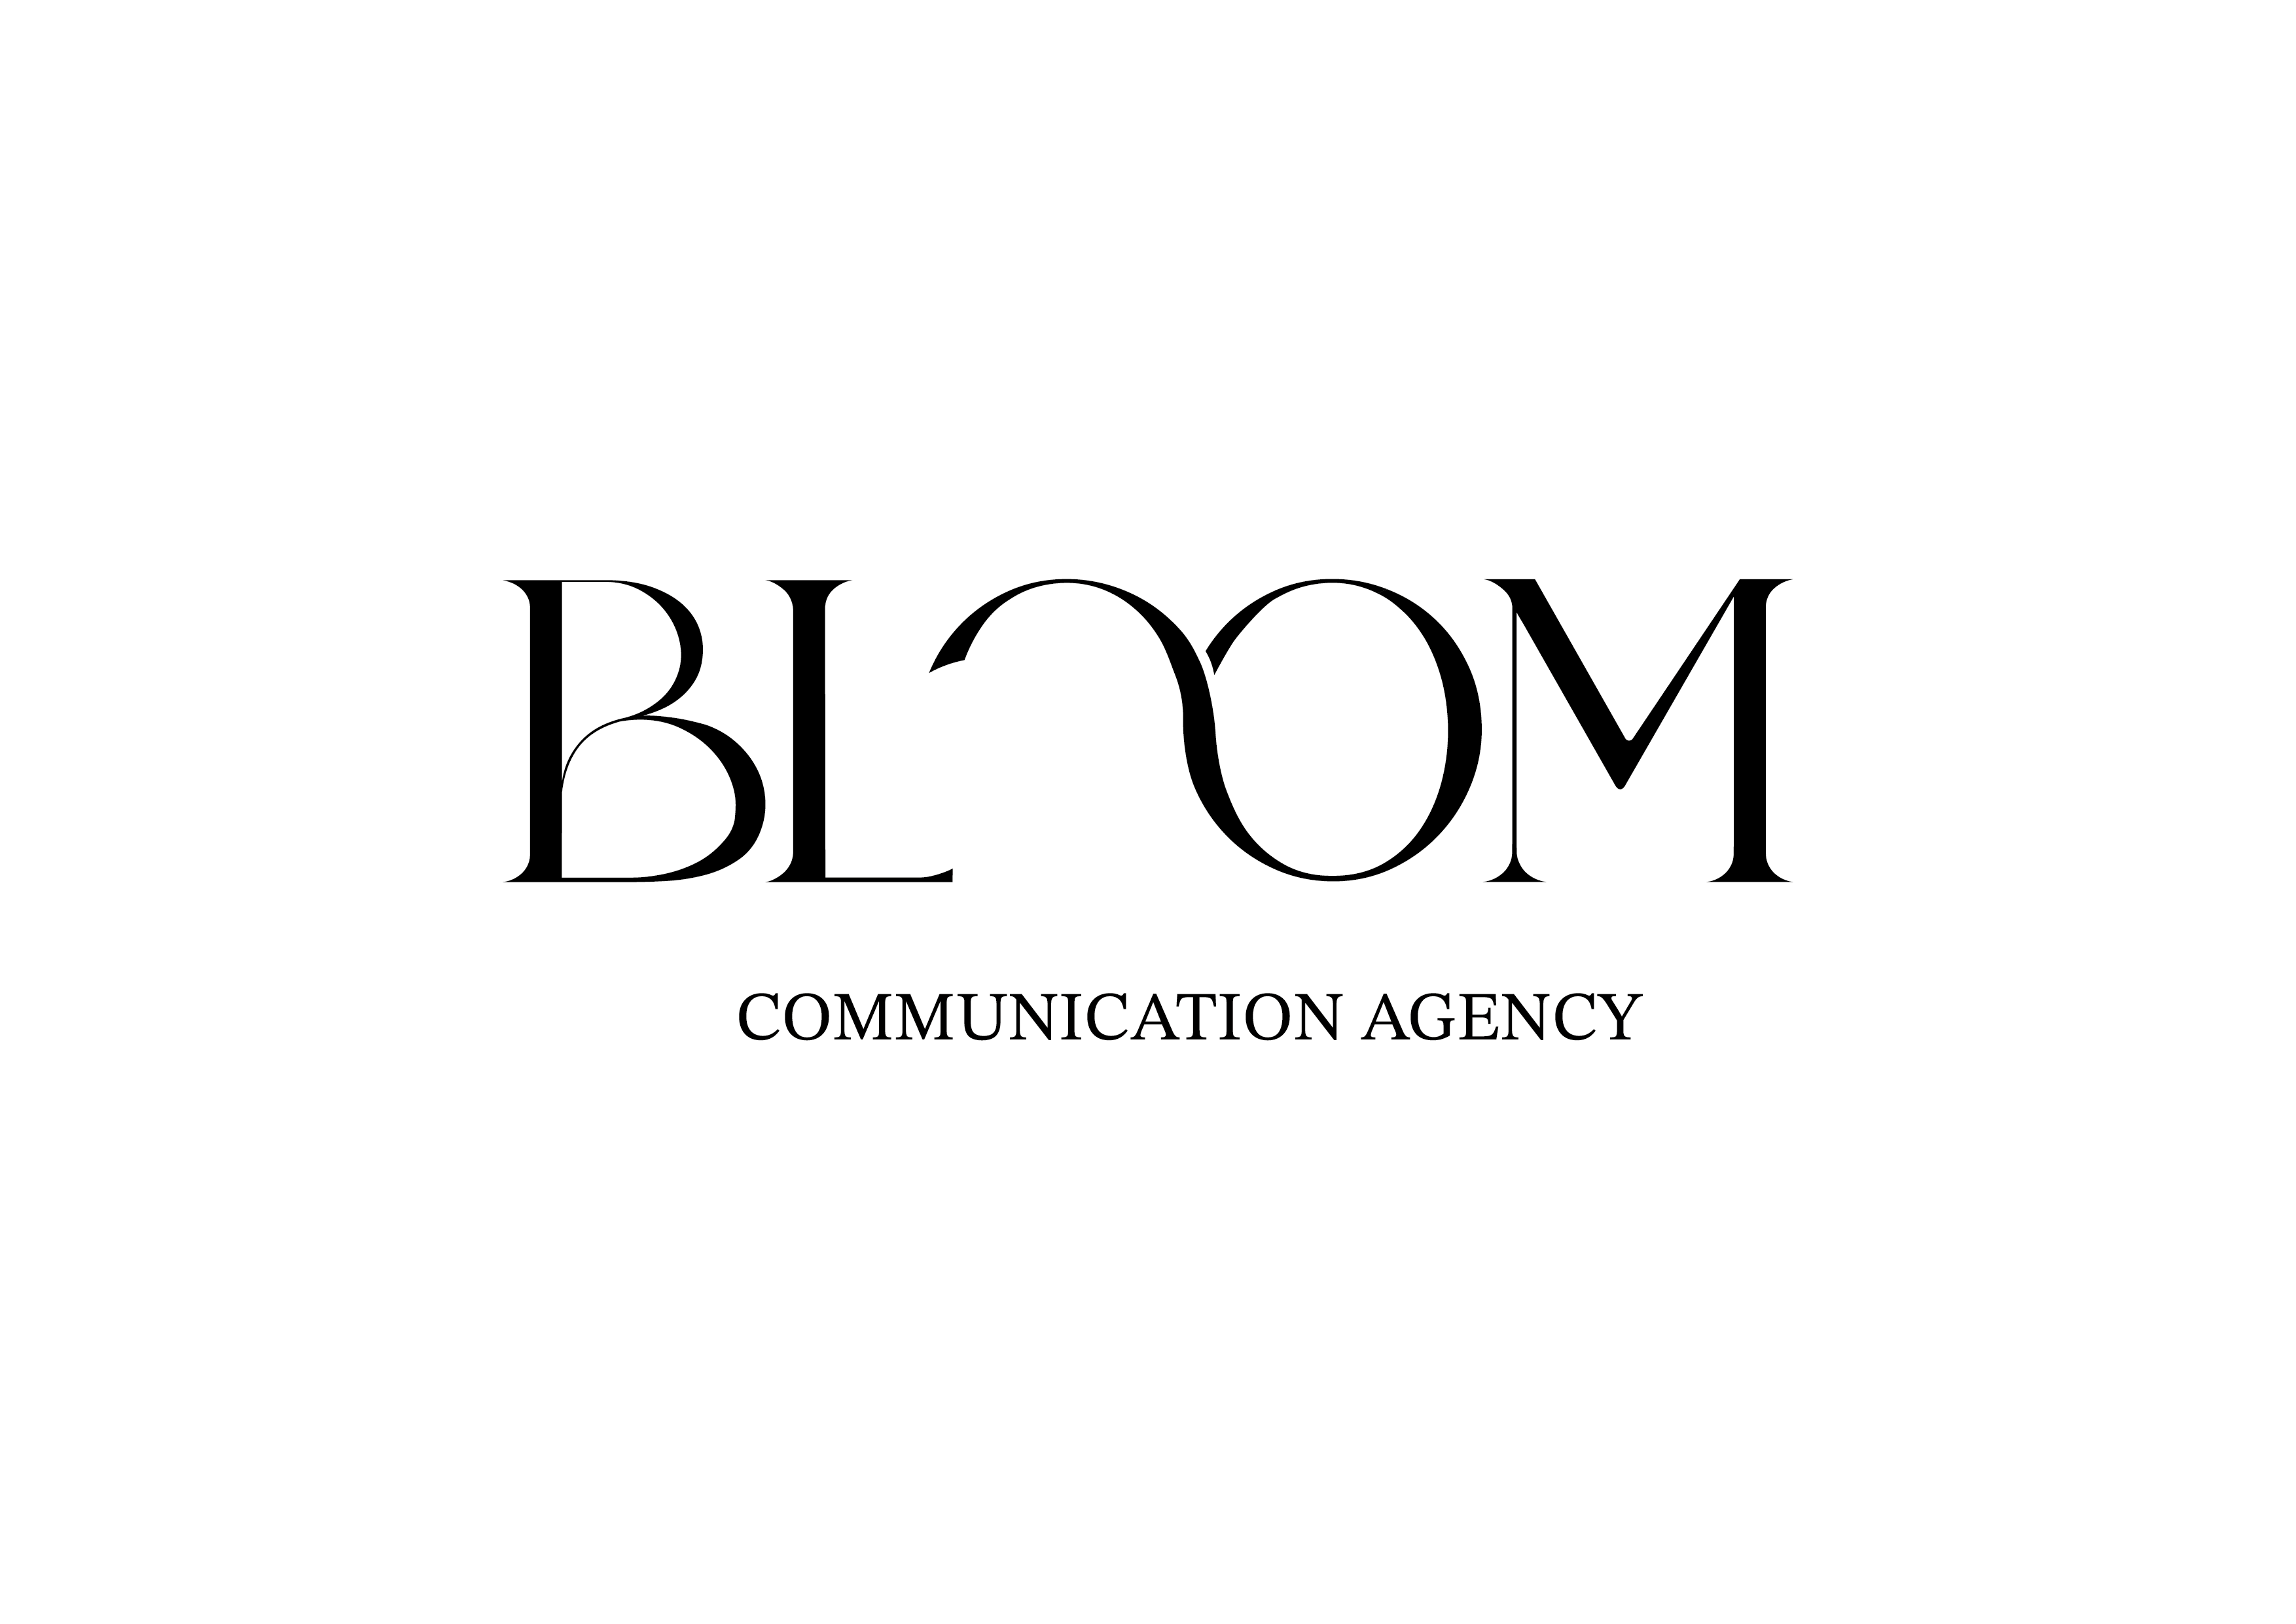 Bloom Agenzia di Comunicazione